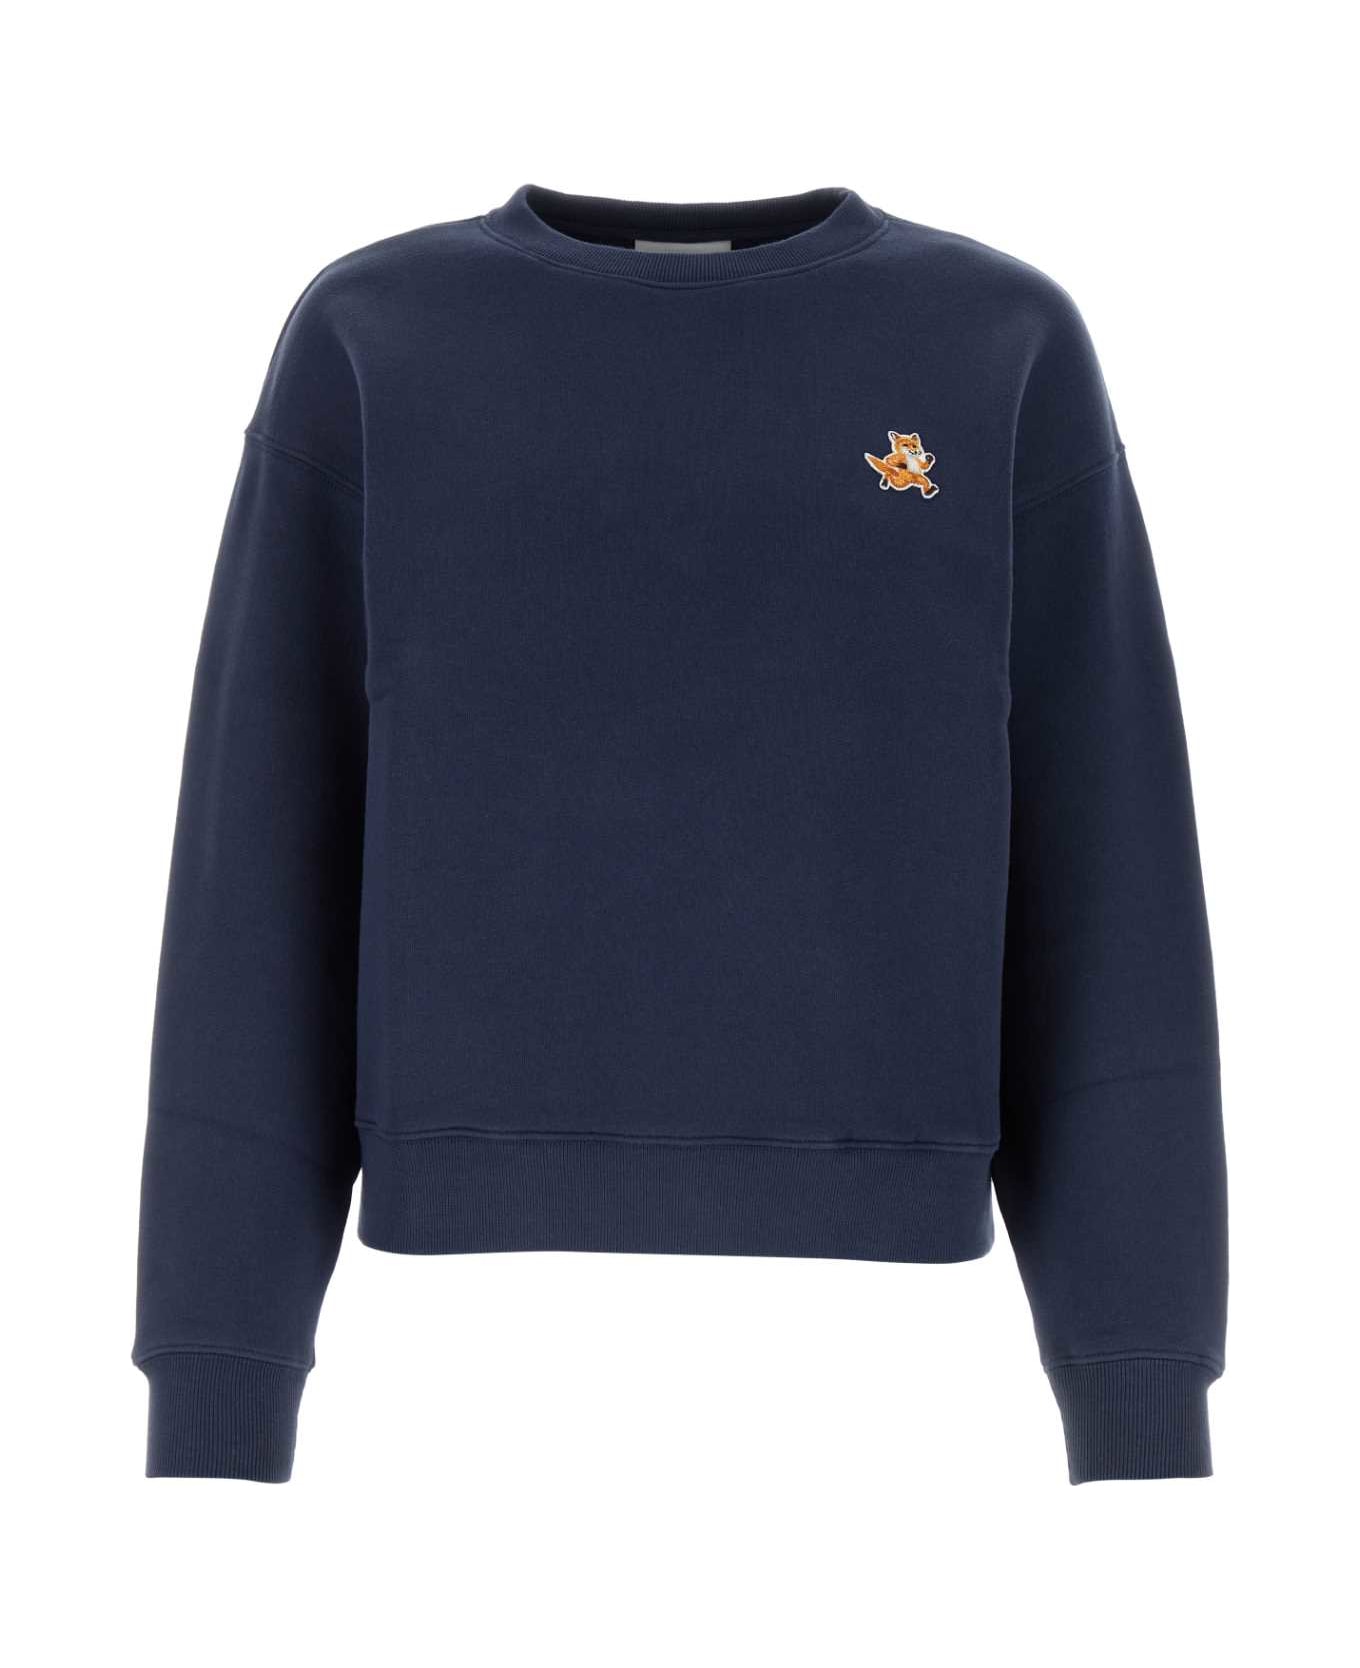 Maison Kitsuné Navy Blue Cotton Sweatshirt - INKBLUE